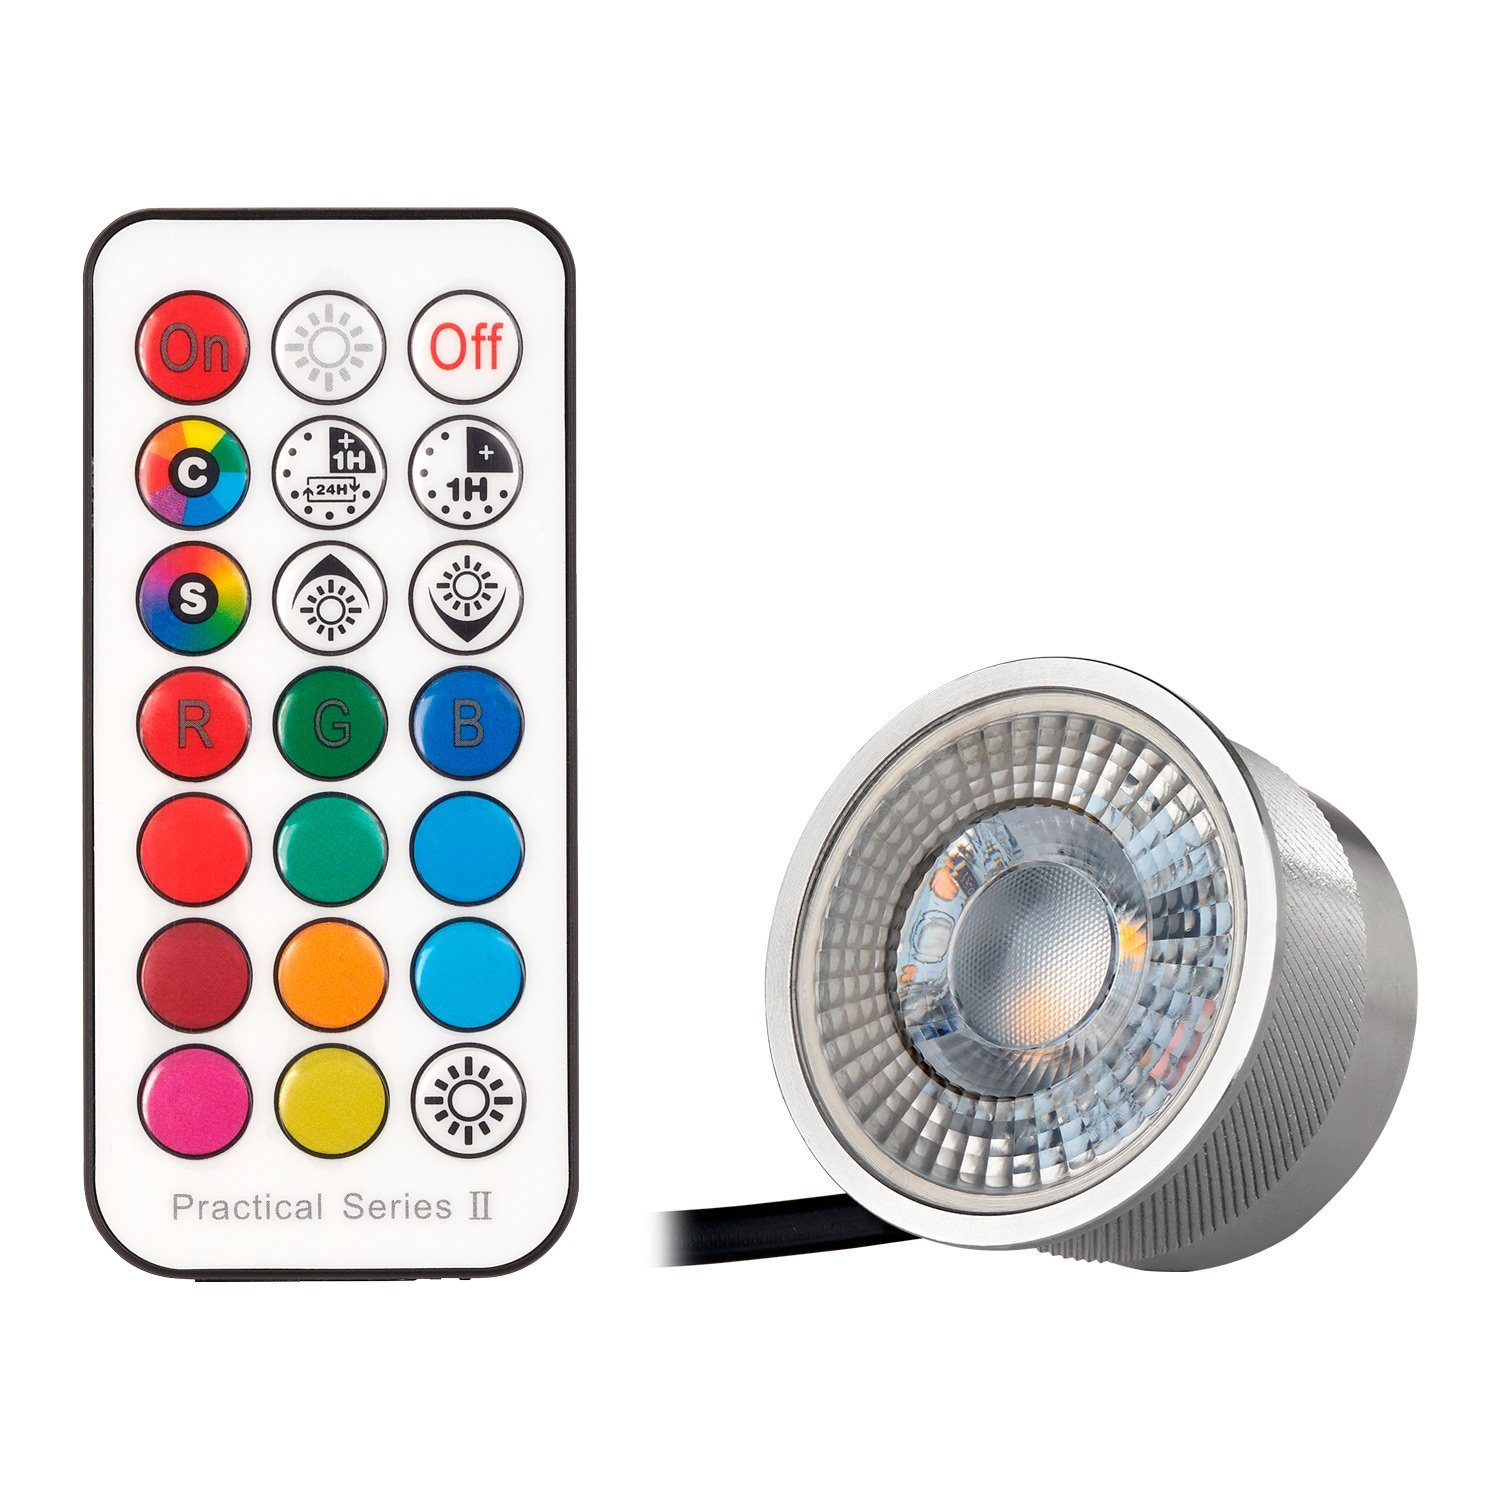 LED - LEDANDO LED Einbaustrahler Set Einbaustrahler zweifarbig flach mit 3W extra in bicolor RGB